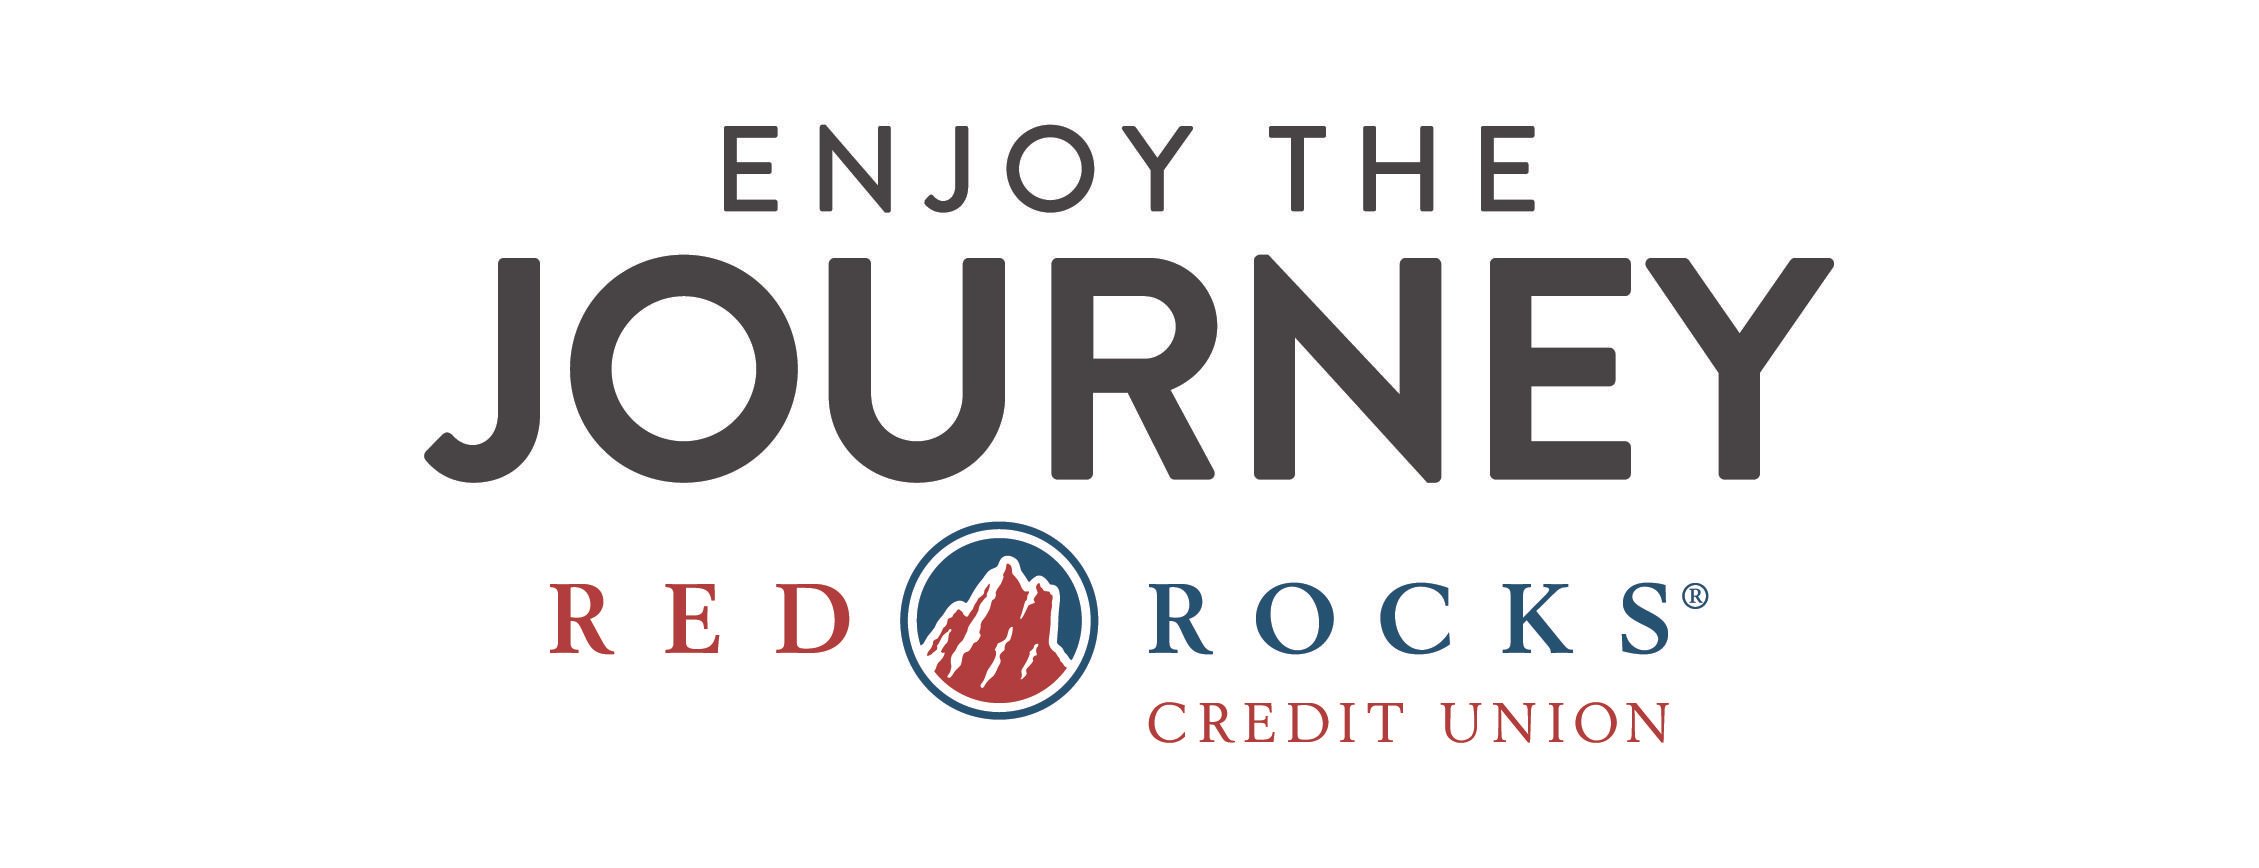 Red Rocks Logo - Home